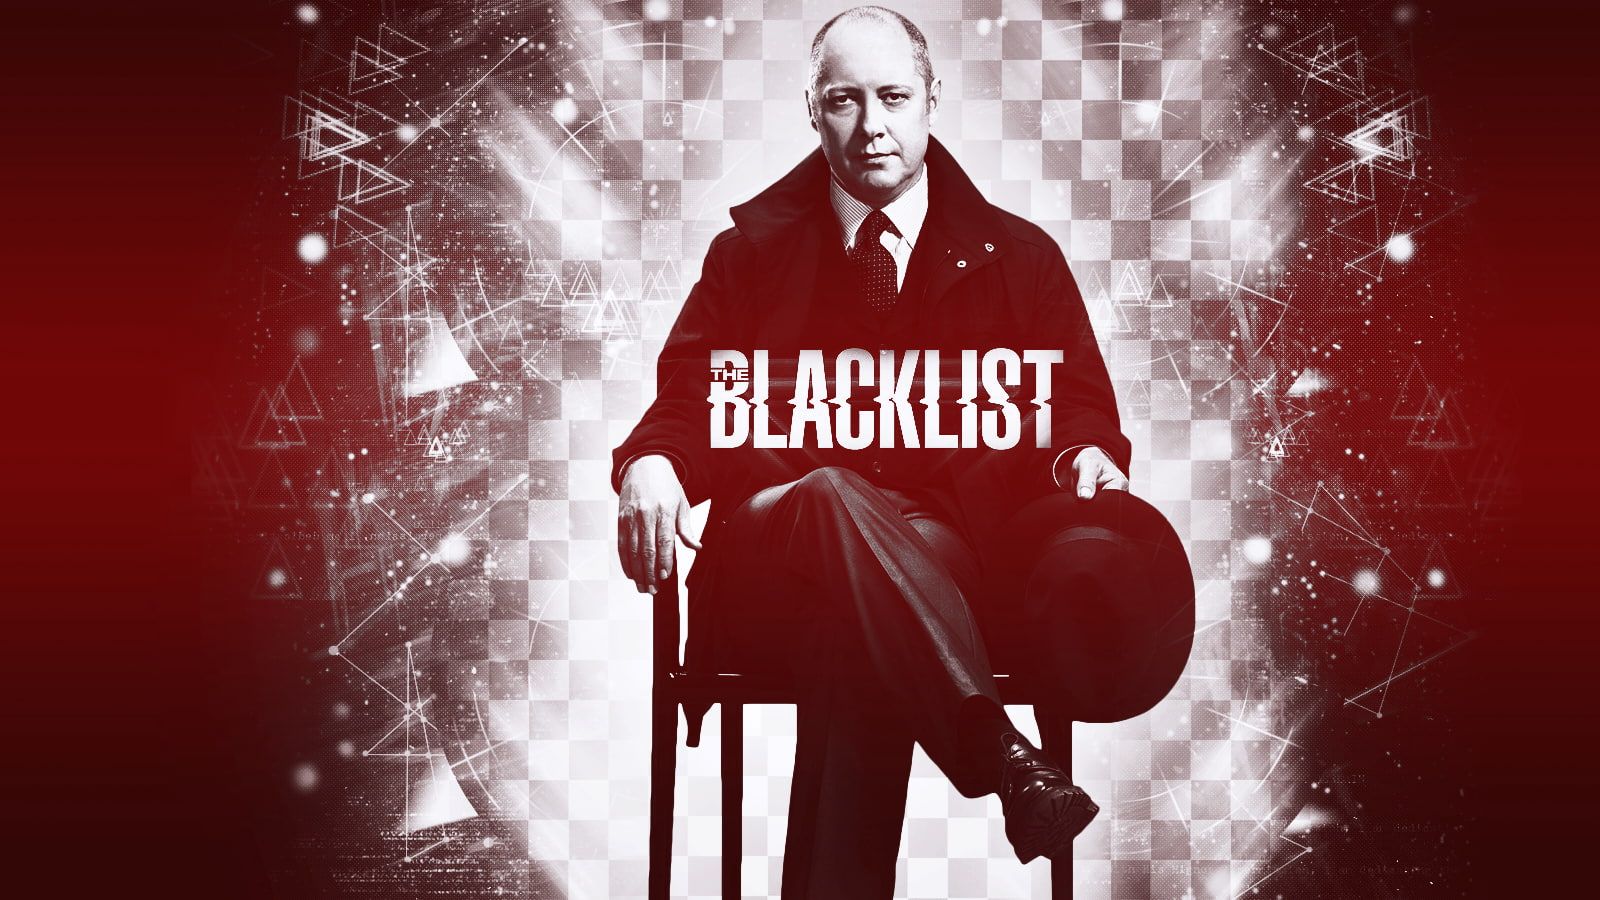 The Blacklist Raymond Reddington P #wallpaper #hdwallpaper